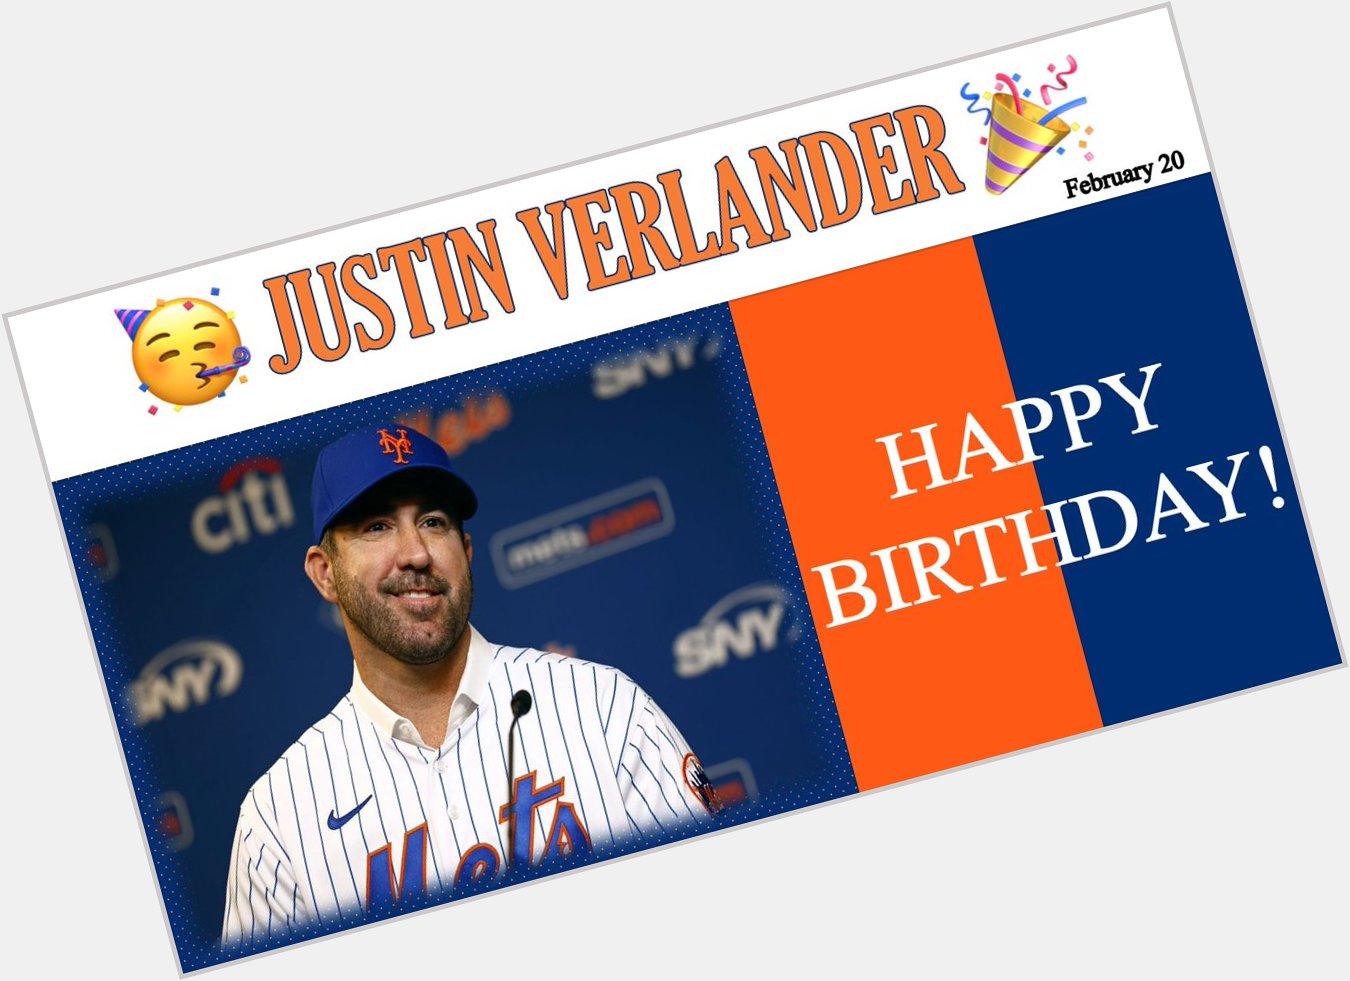 Happy Birthday, Justin Verlander!  